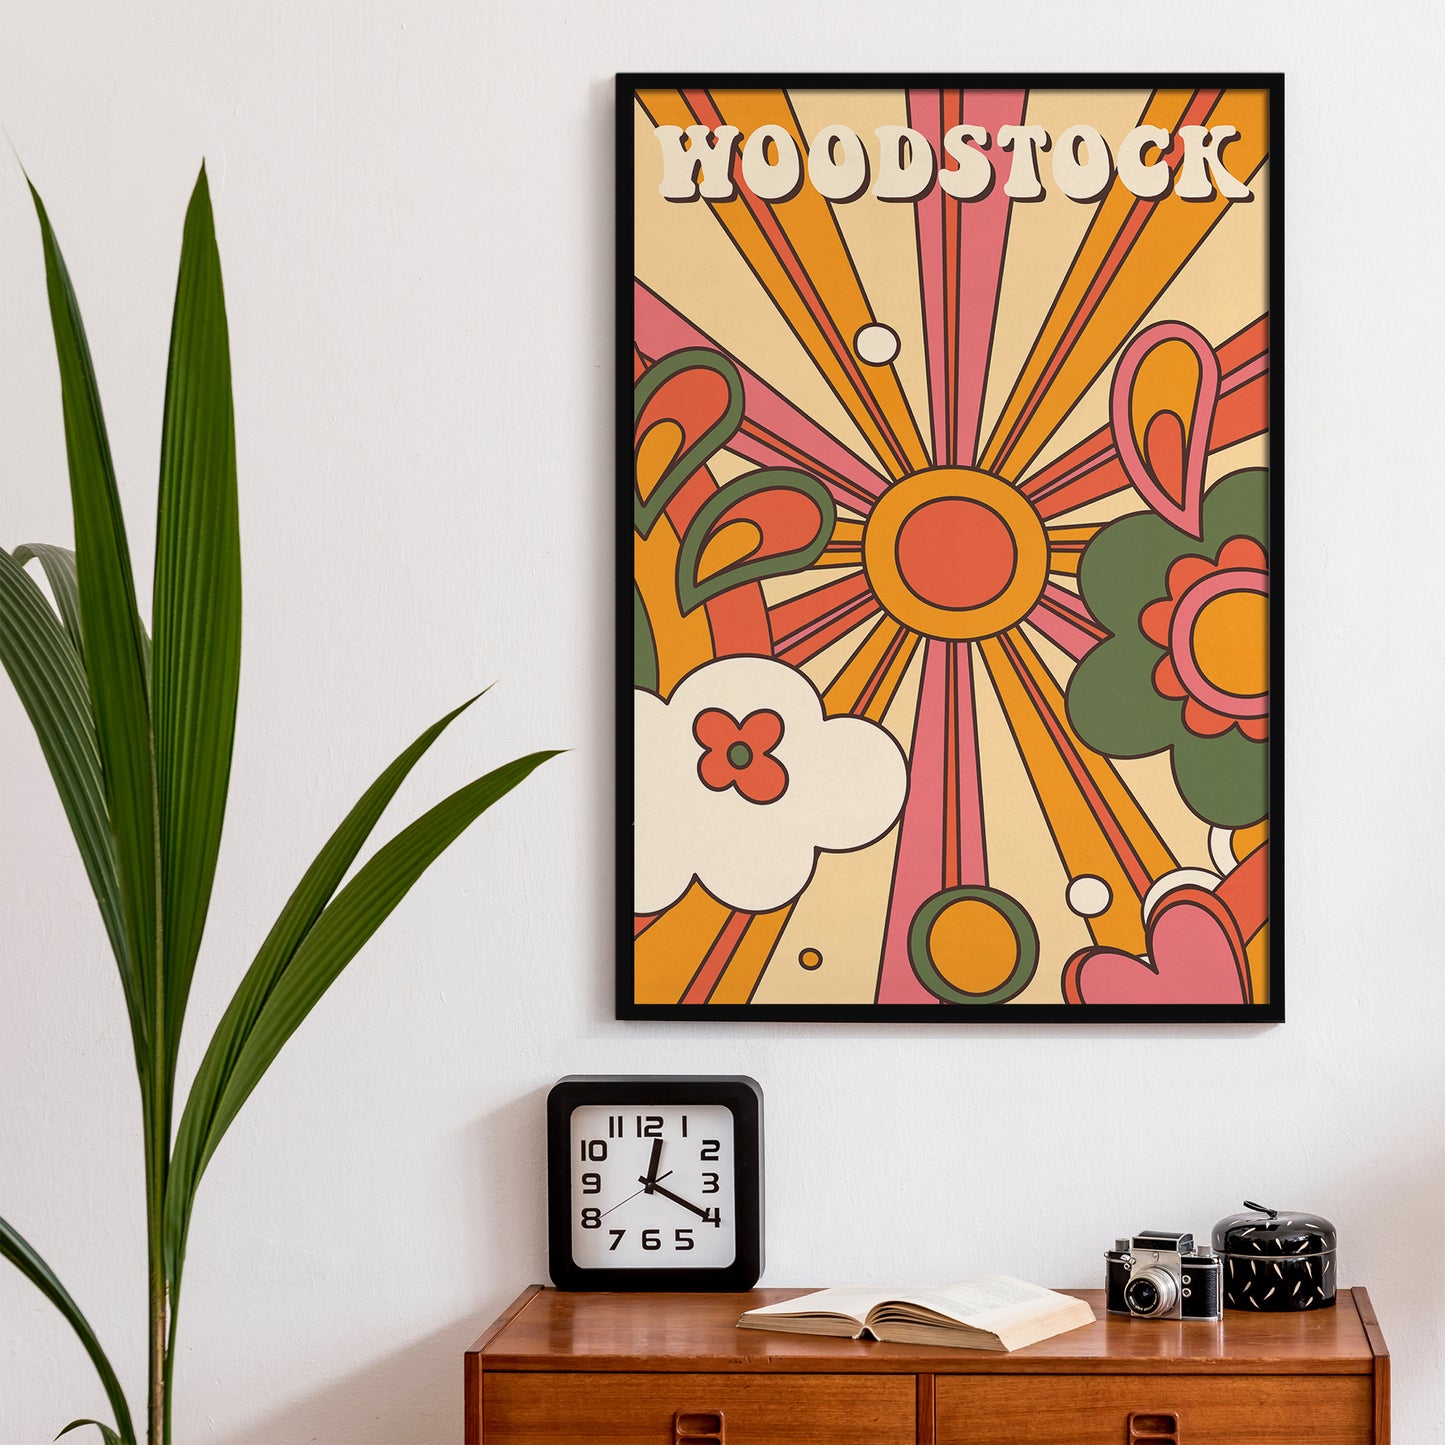 Woodstock Poster